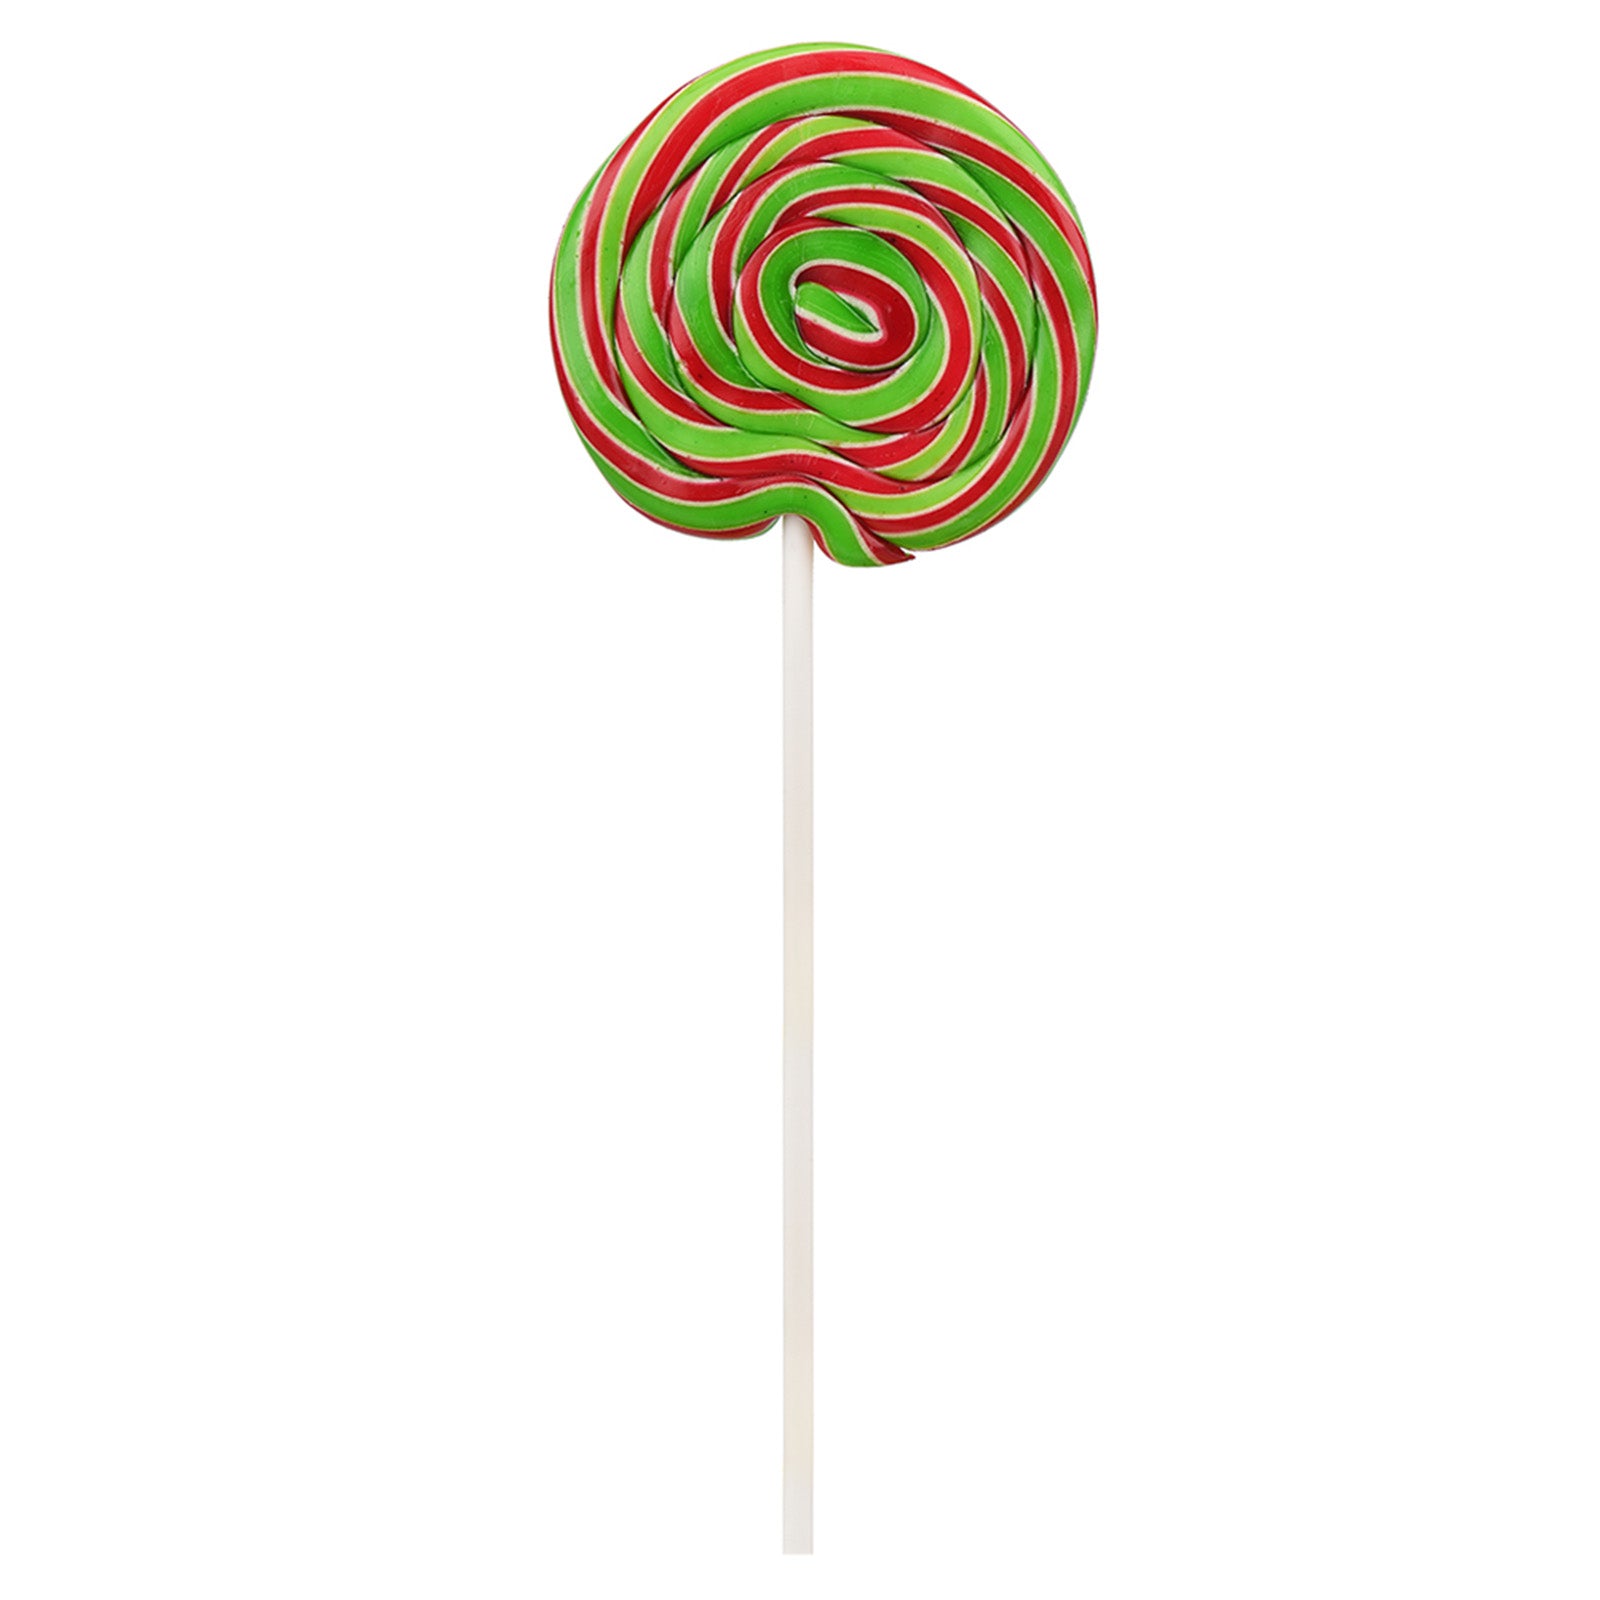 Whoa-ter-Melon Lollipop 55gm